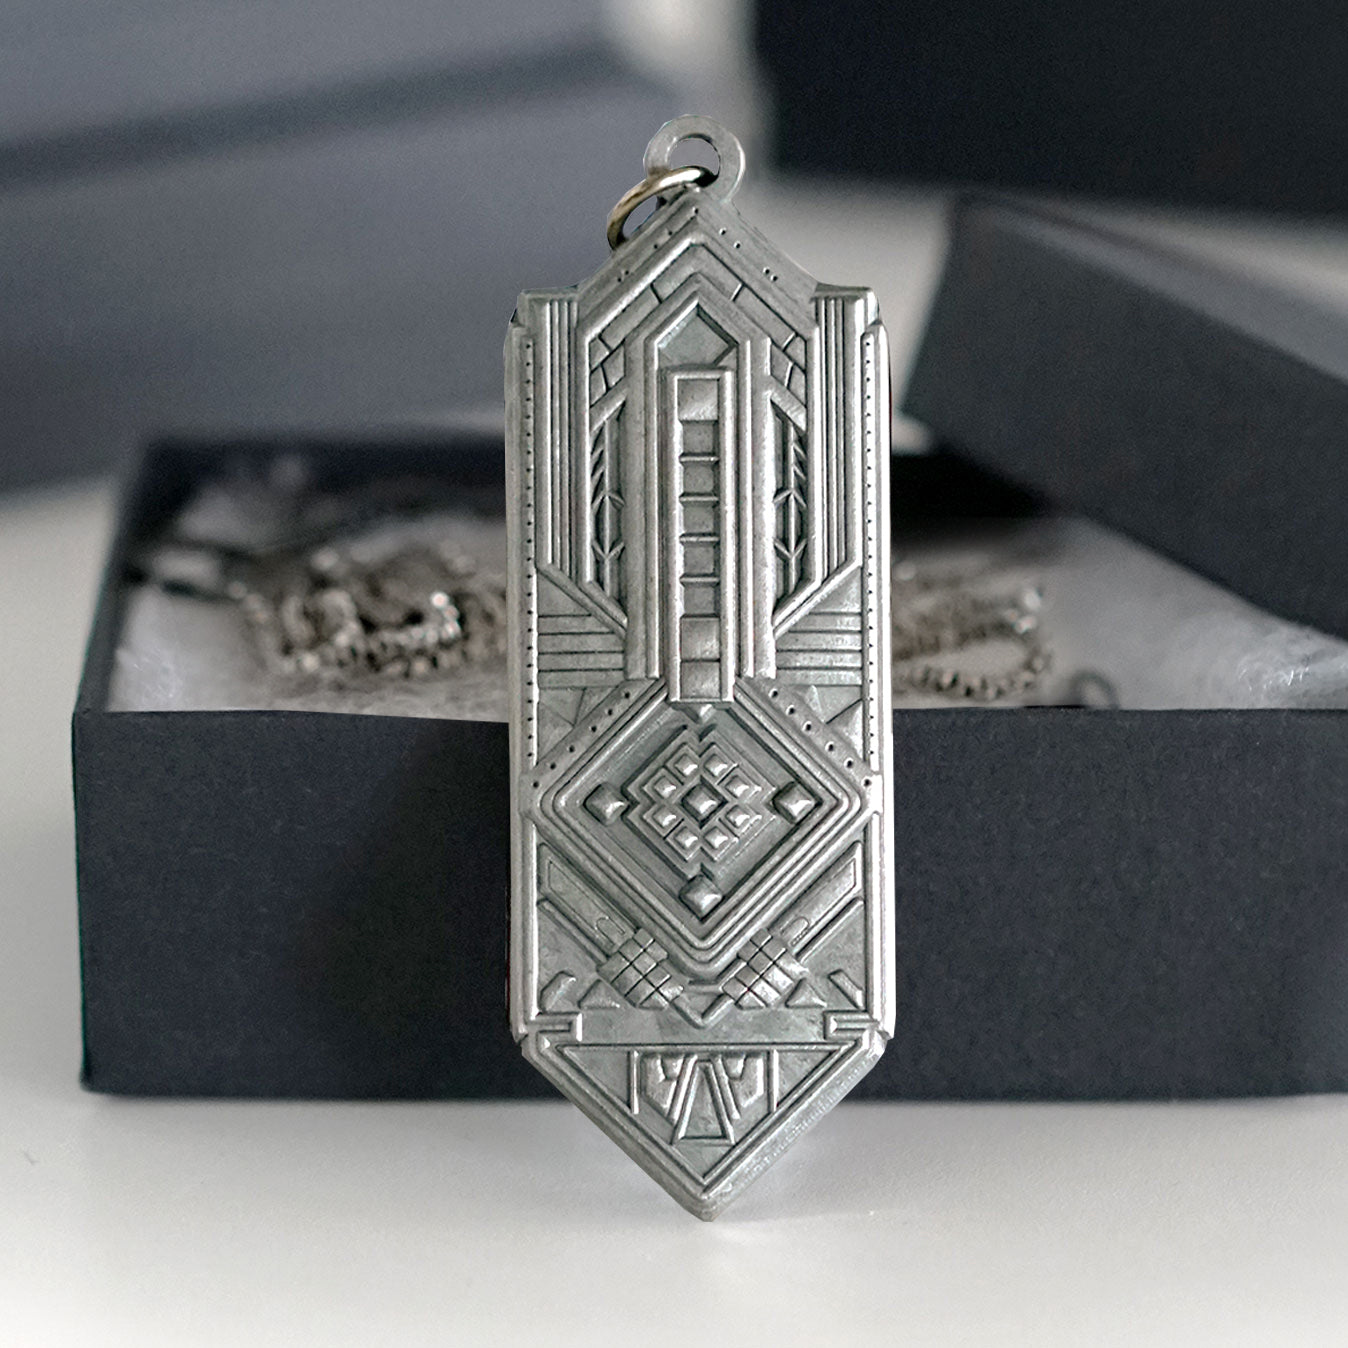 Ambrosia Antique Silver Pendant by Threyda - 2